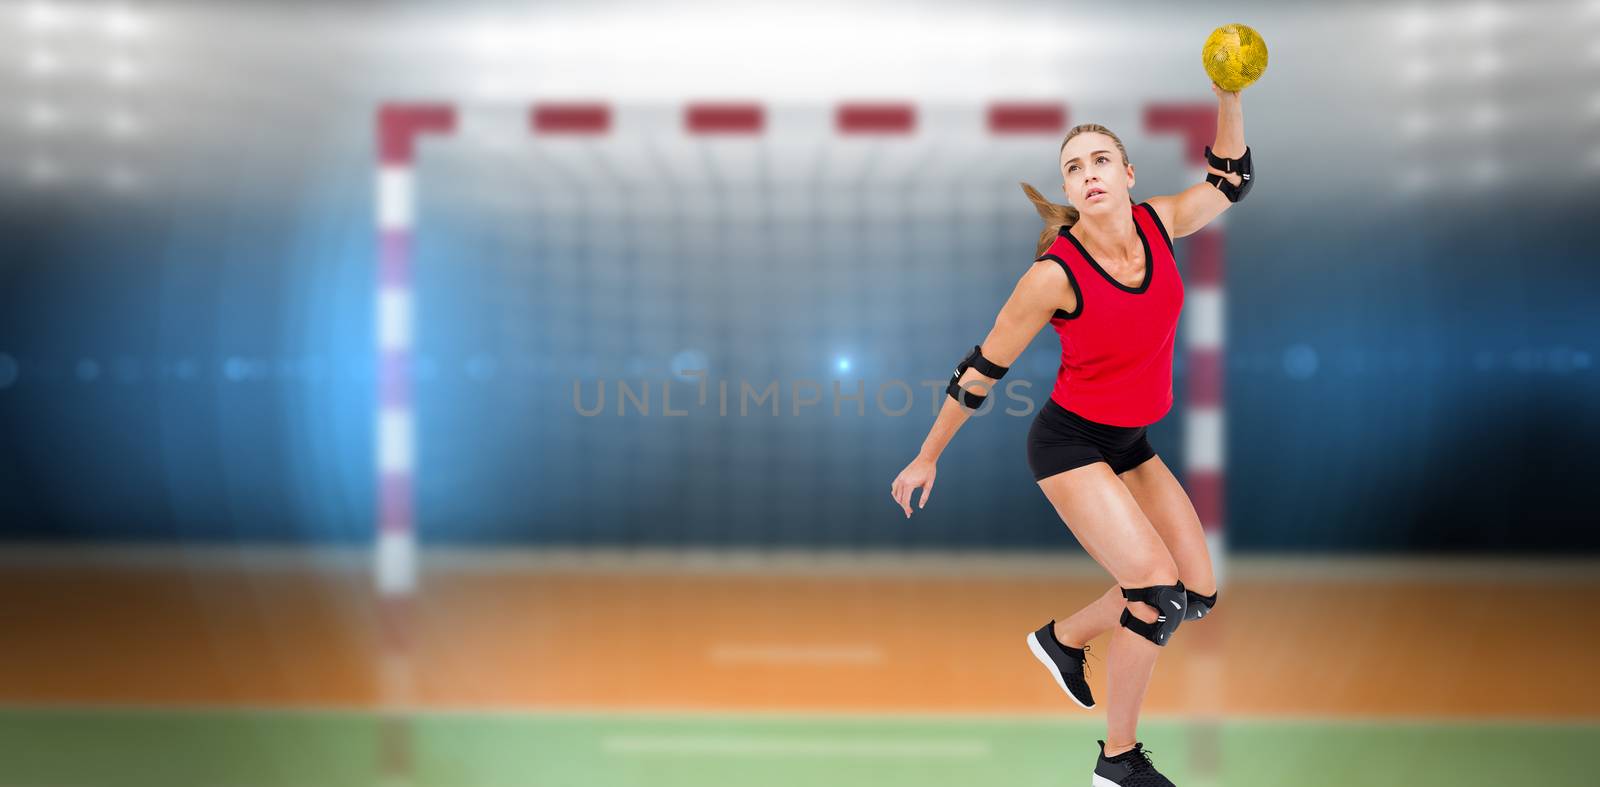 Female athlete with elbow pad throwing handball against digital image of handball goal 